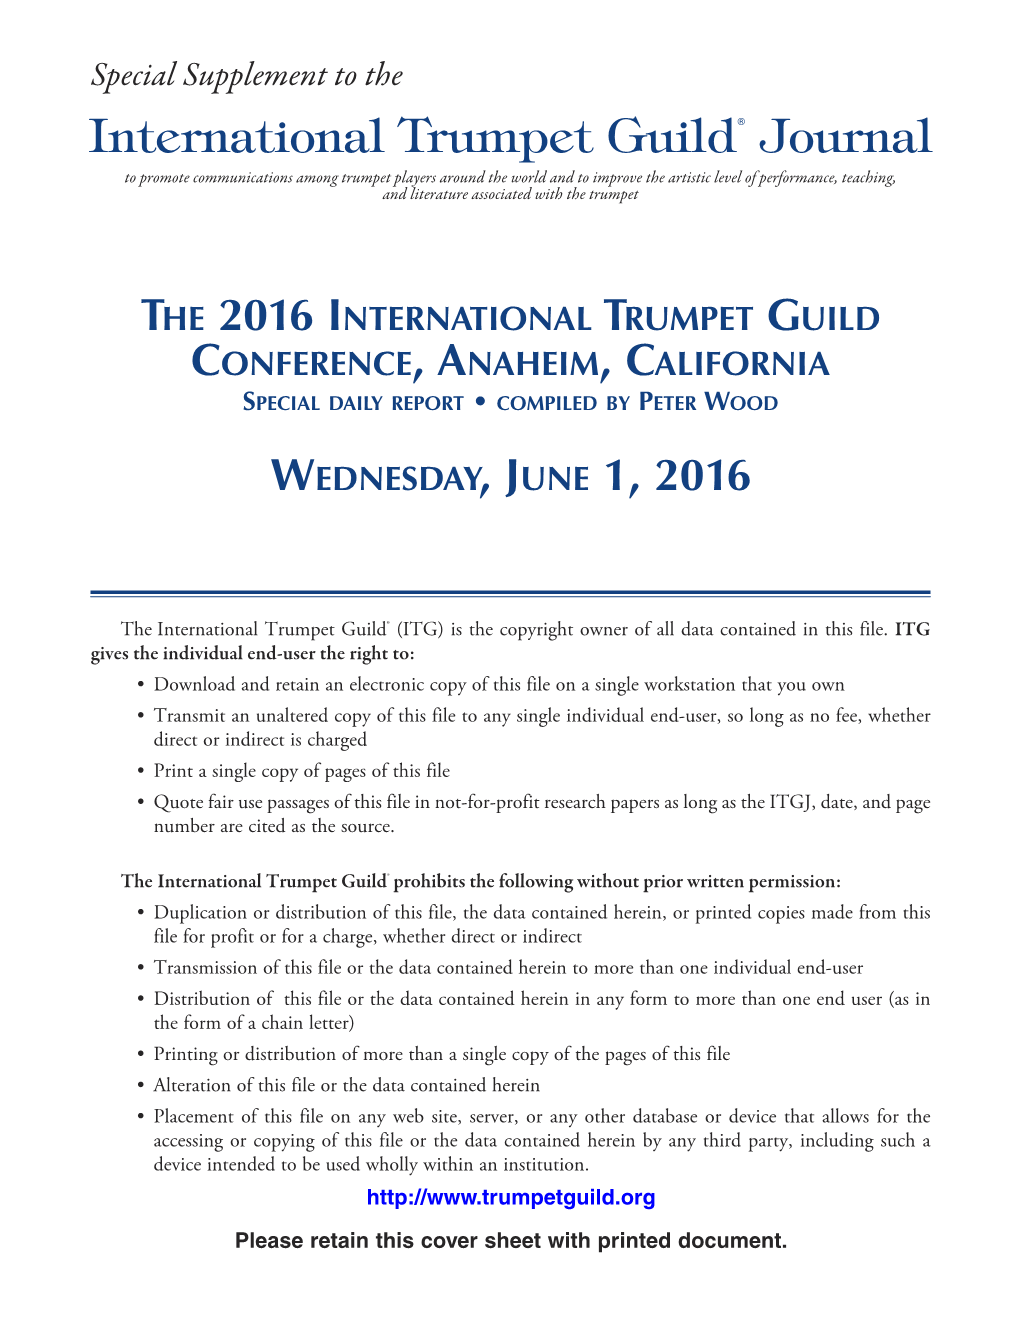 The 2016 International Trumpet Guild